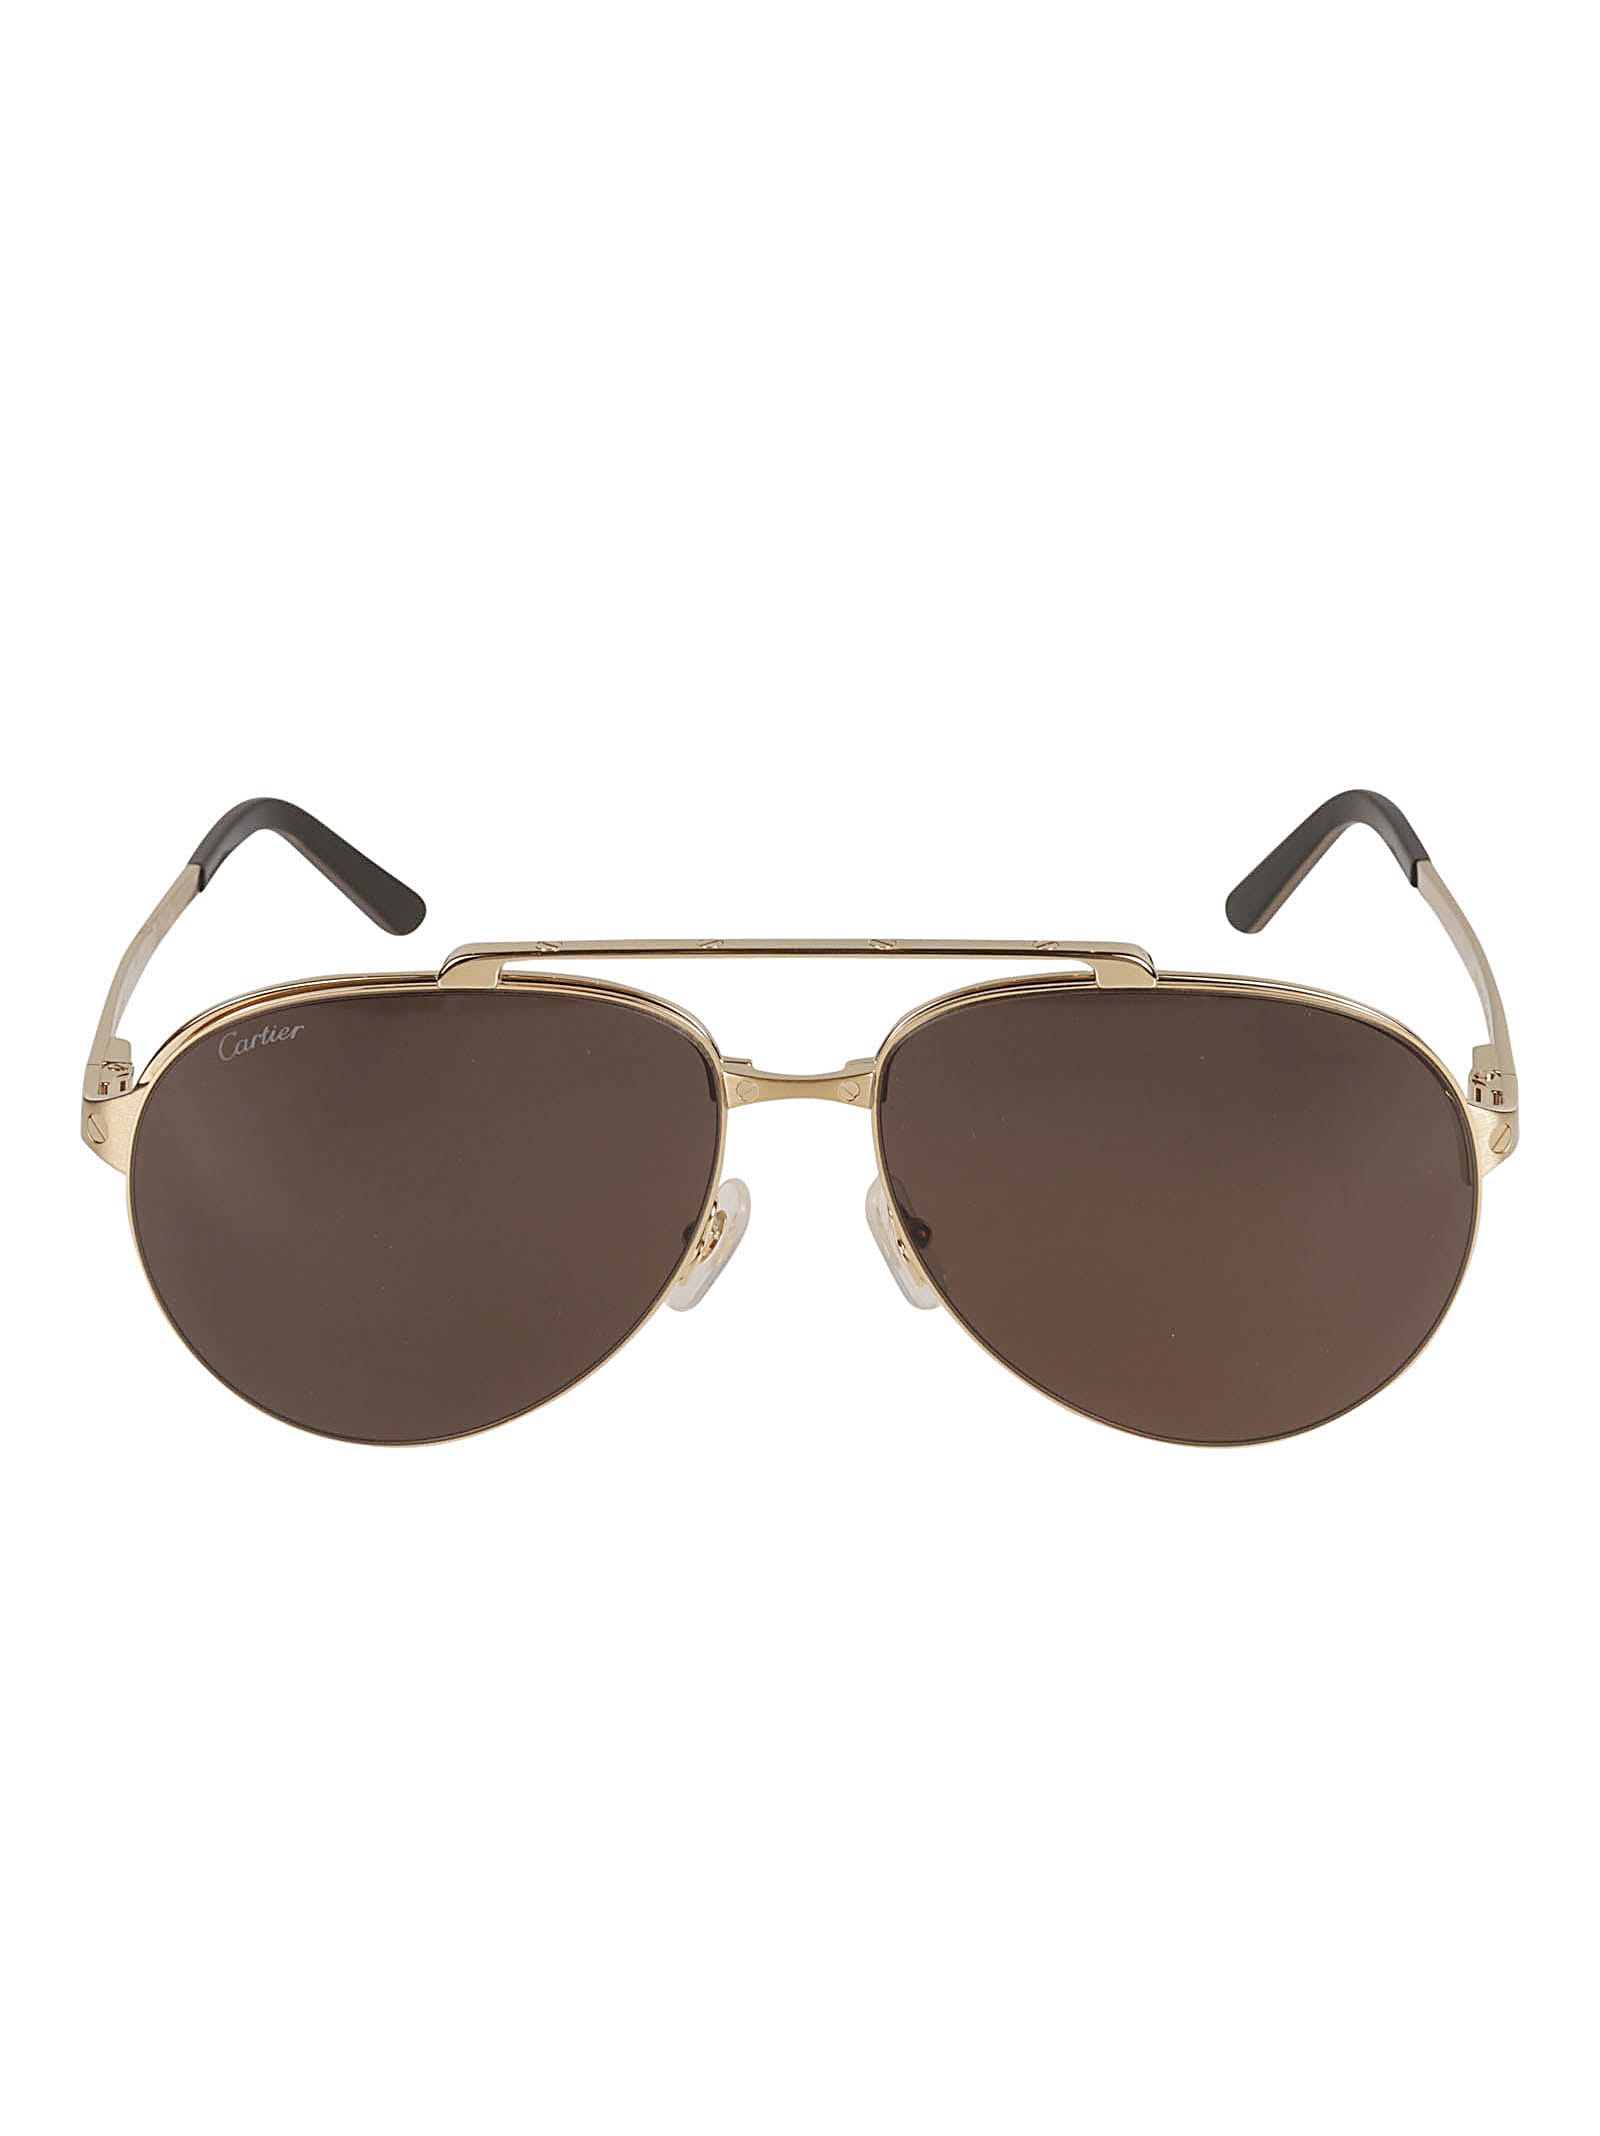 Cartier Aviator Classic Sunglasses In Gold/grey